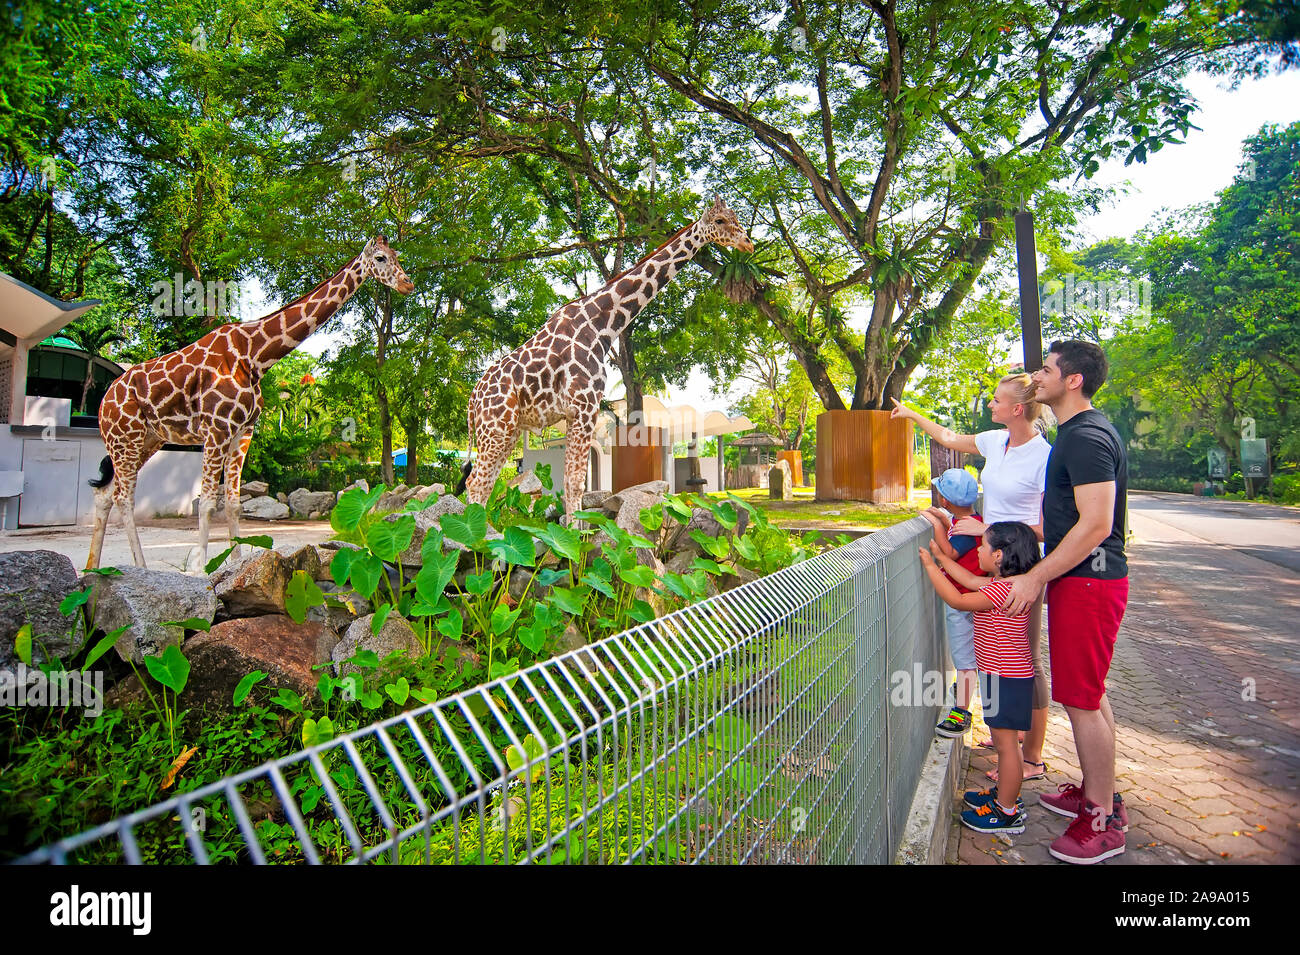 Zoo Negara Malaysia Stock Photo Alamy